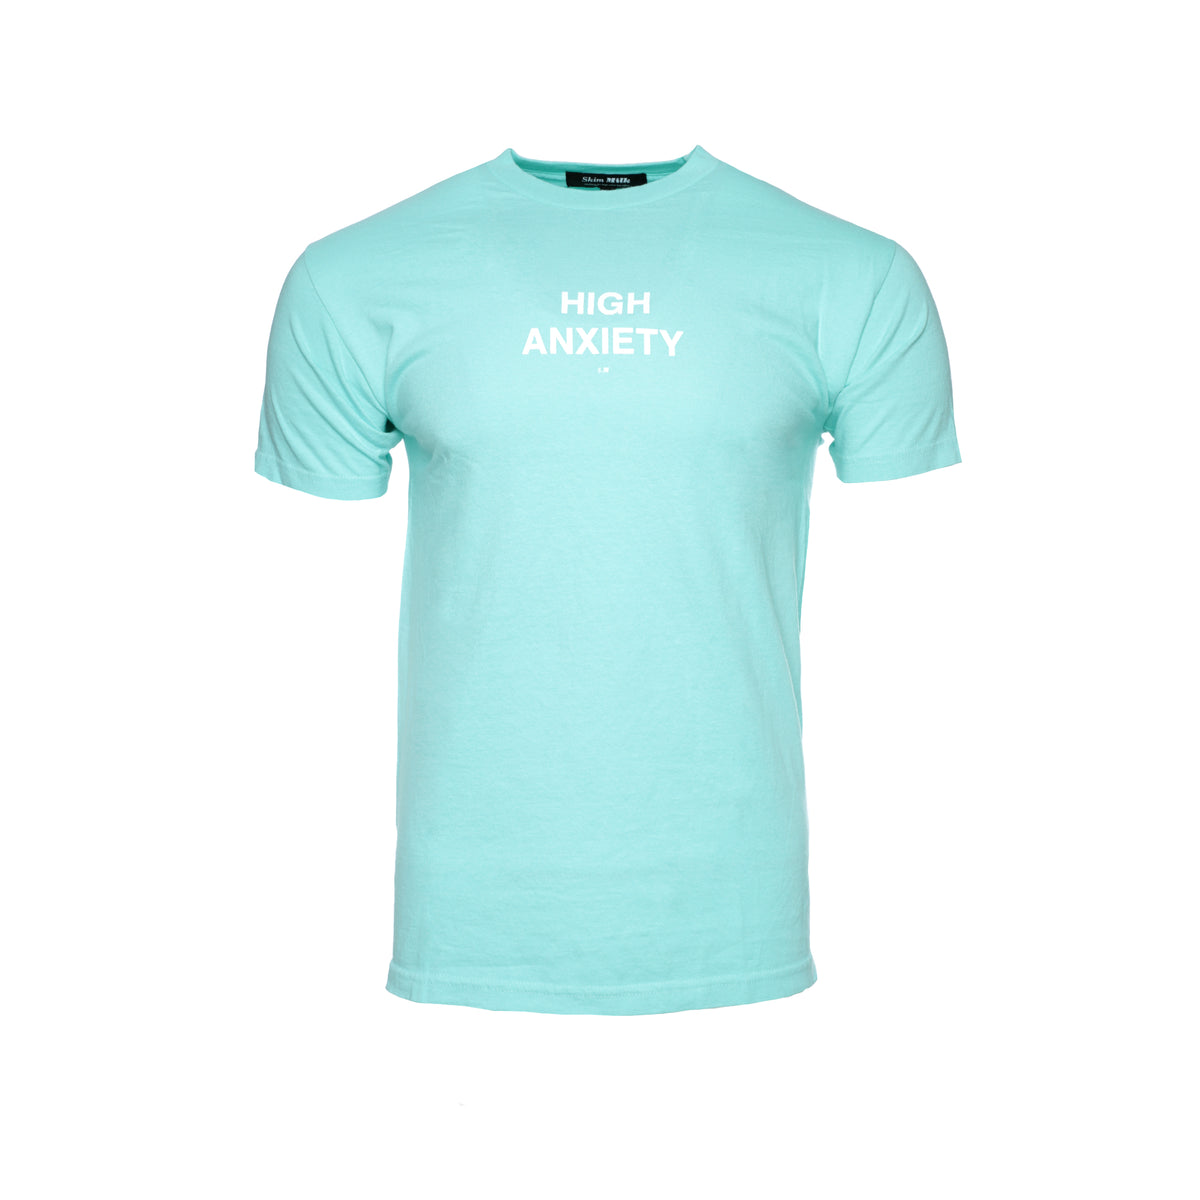 Skim Milk High Anxiety Men's SS Graphic T-Shirt